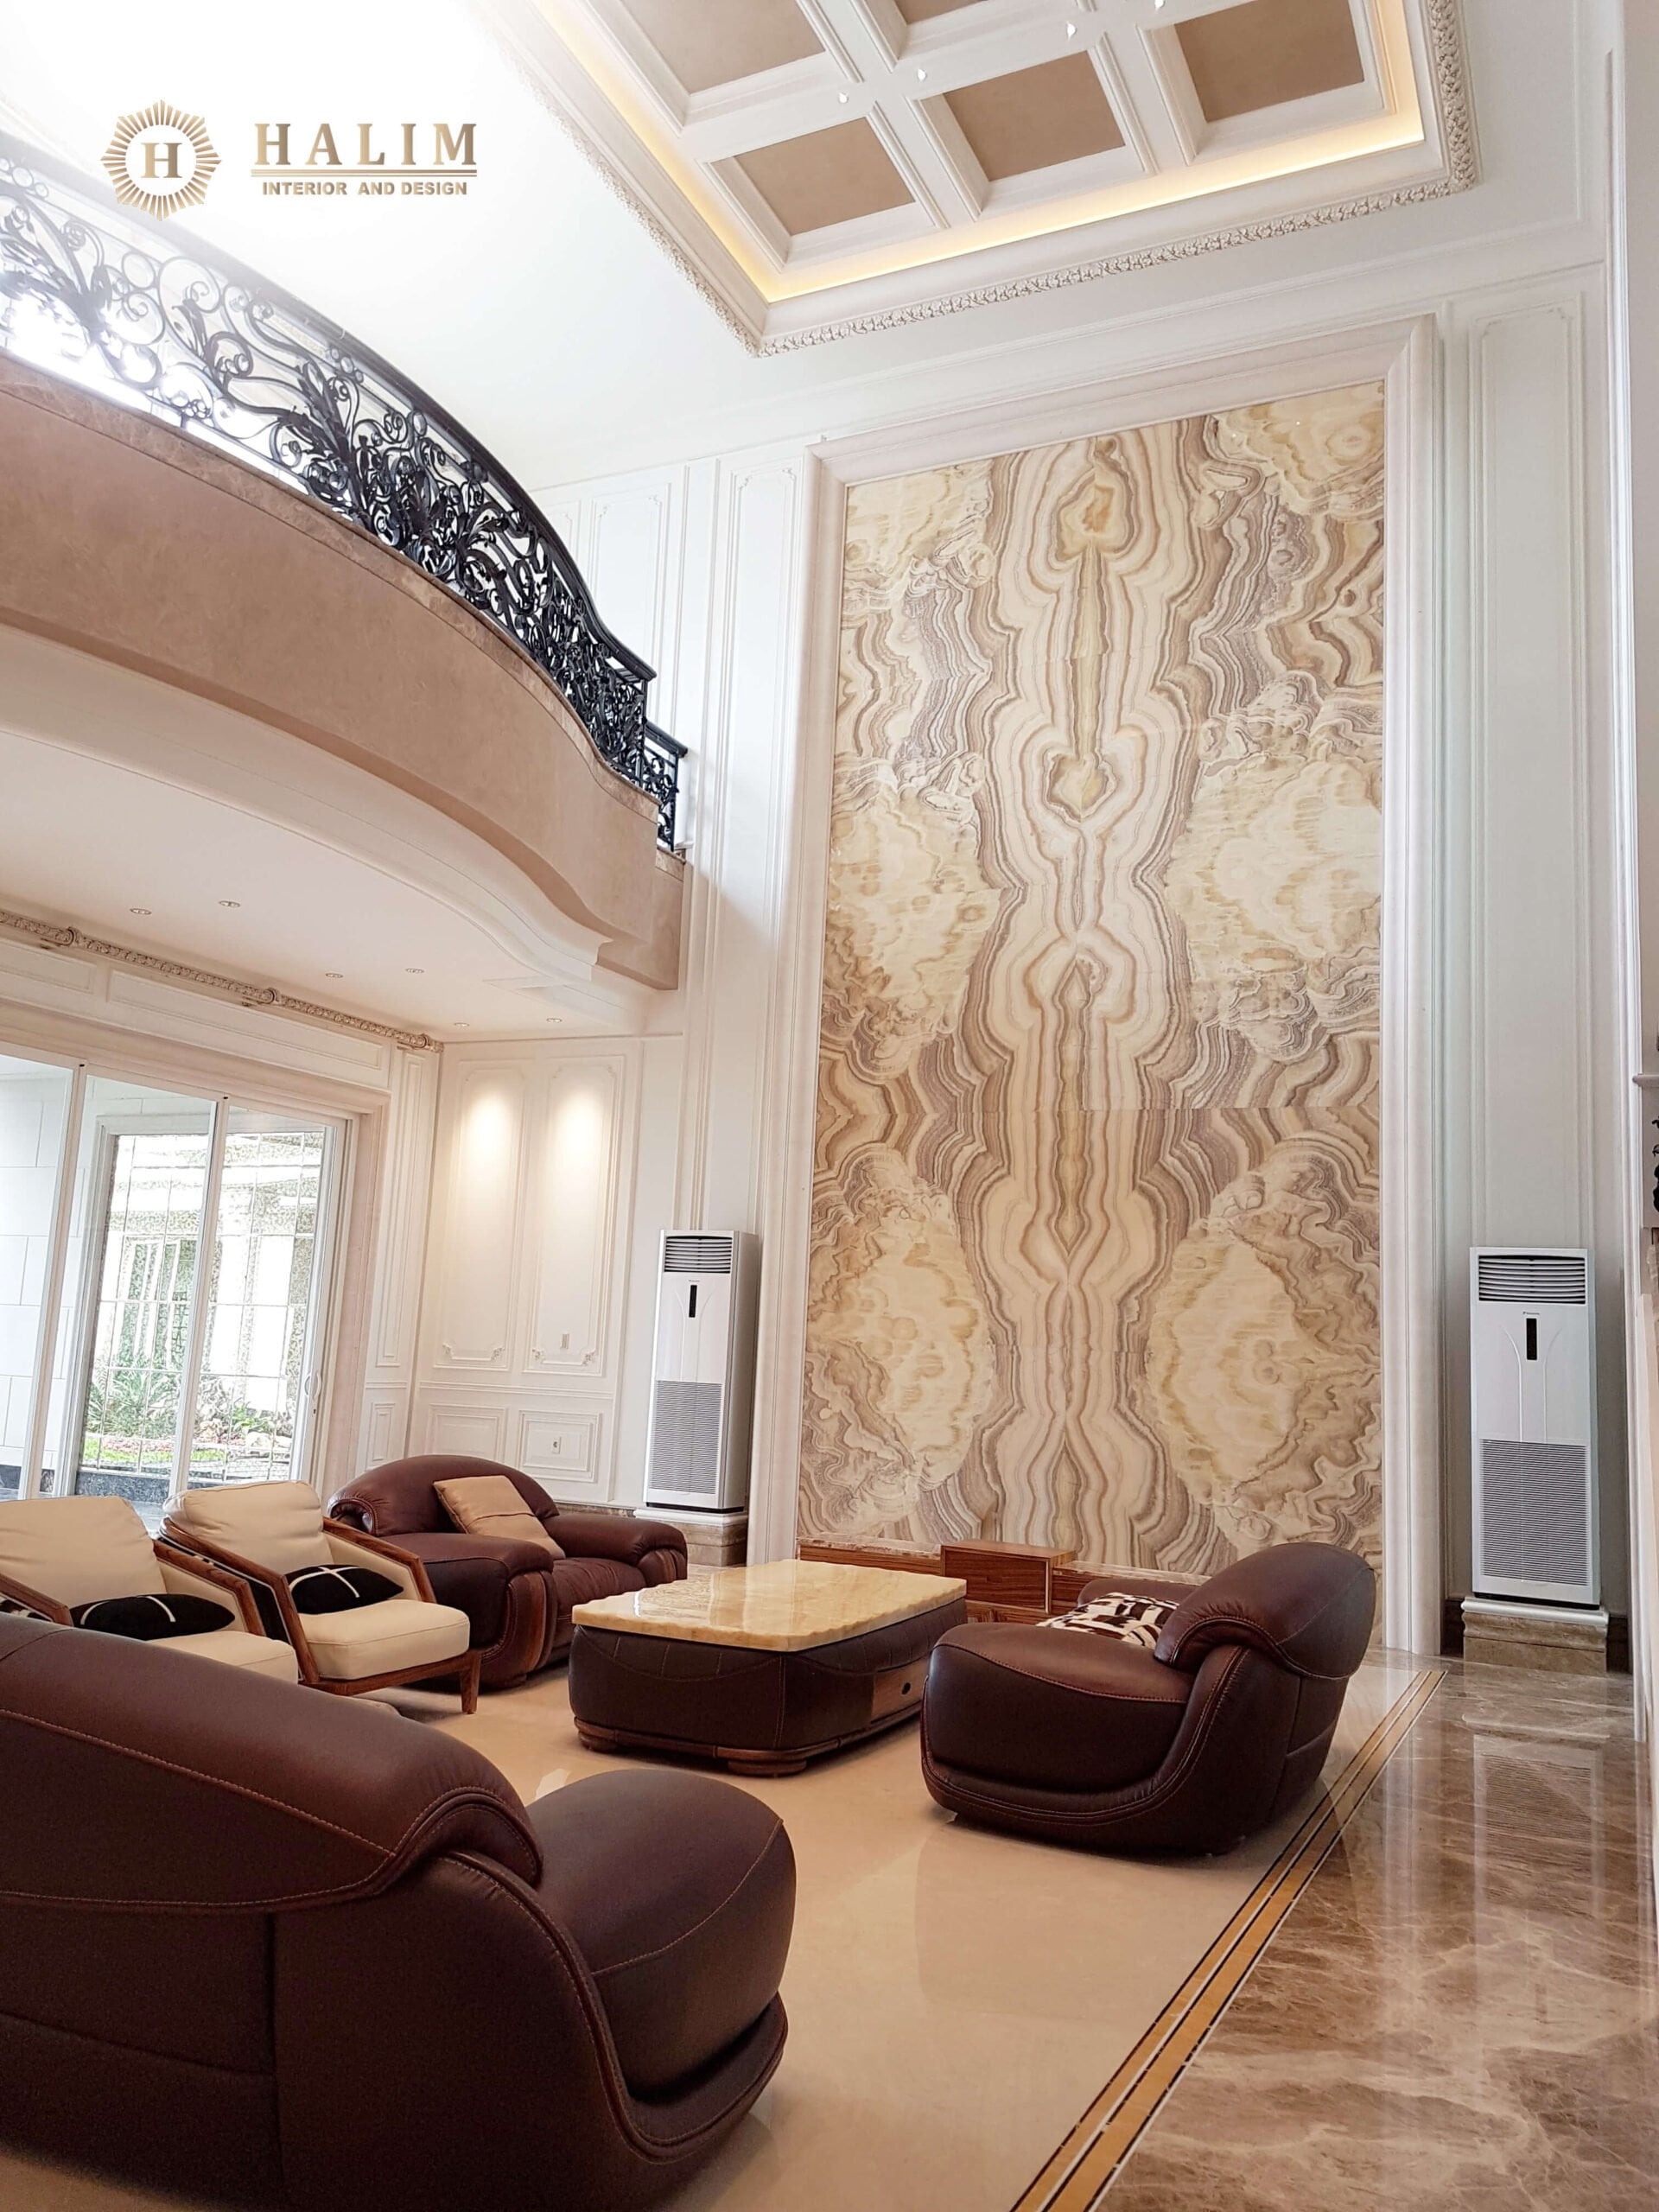 Halim Interior modern furniture contemporer american style minimalist european classic surabaya Kertajaya 1 scaled